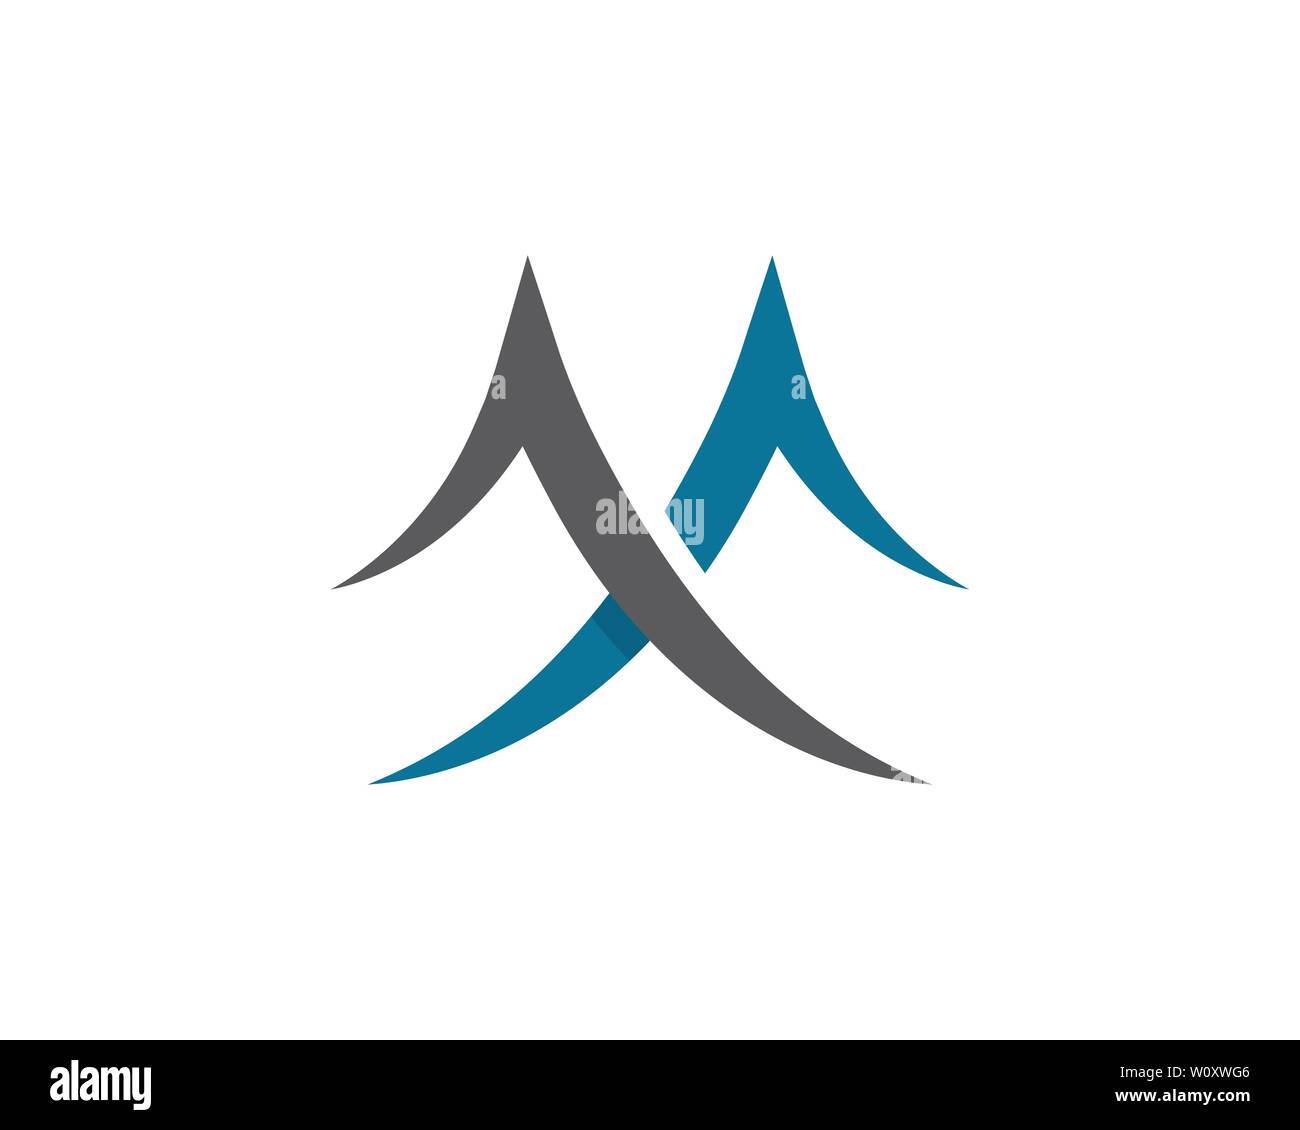 M schreiben Logo Template Vector Illustration Design Stock Vektor